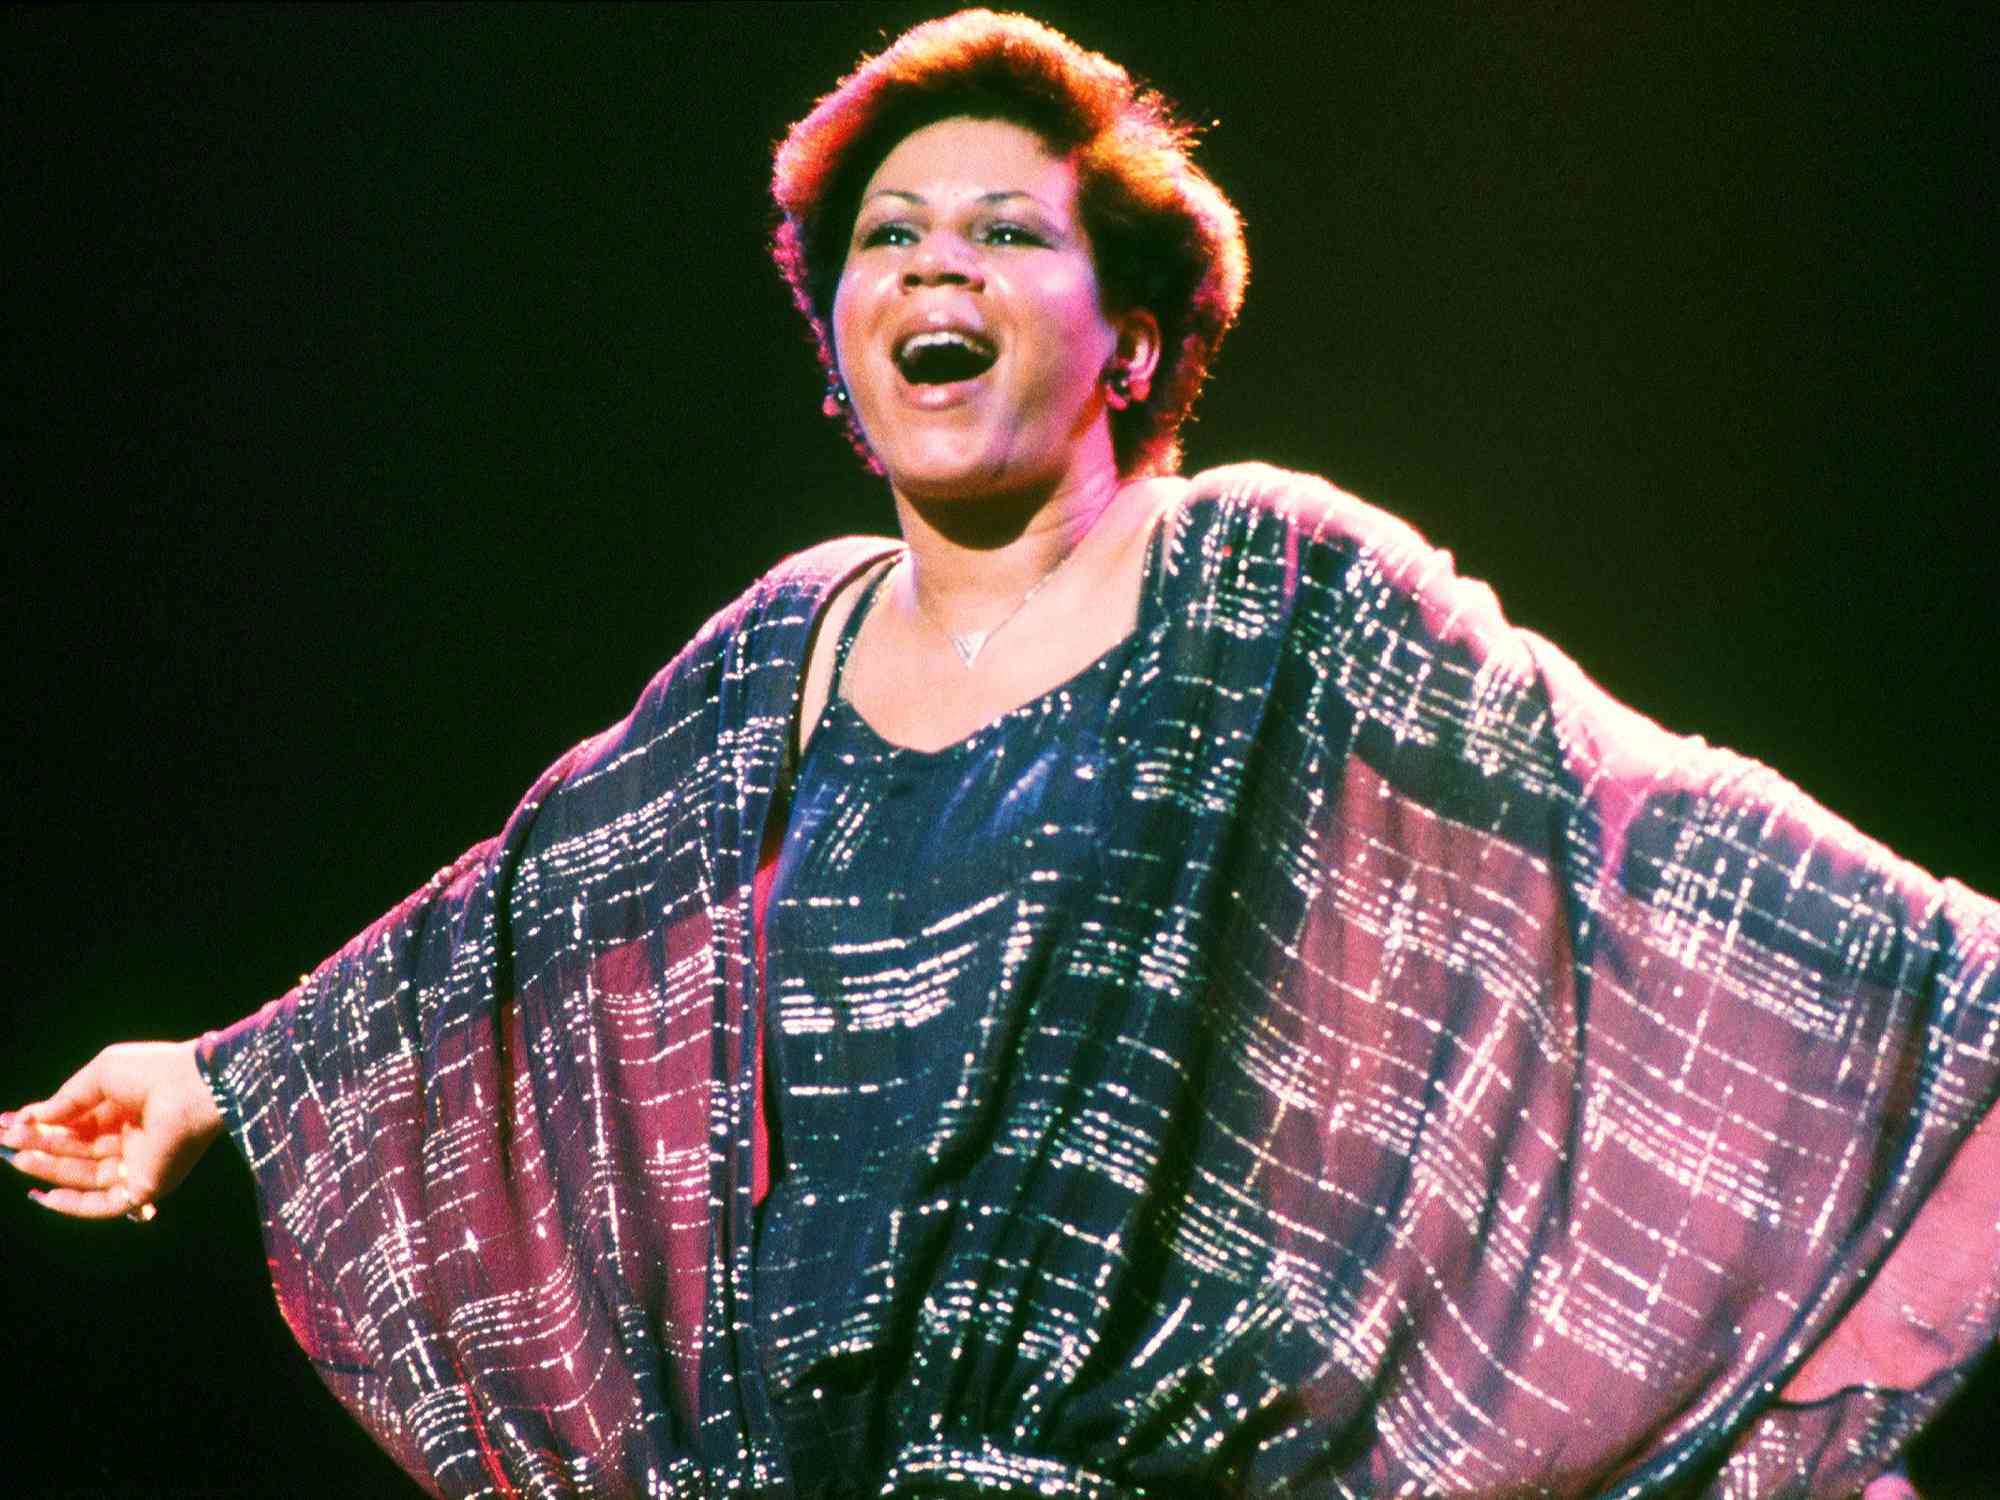 Minnie Riperton (1947 - 1979) performs on stage, New York, 1977.